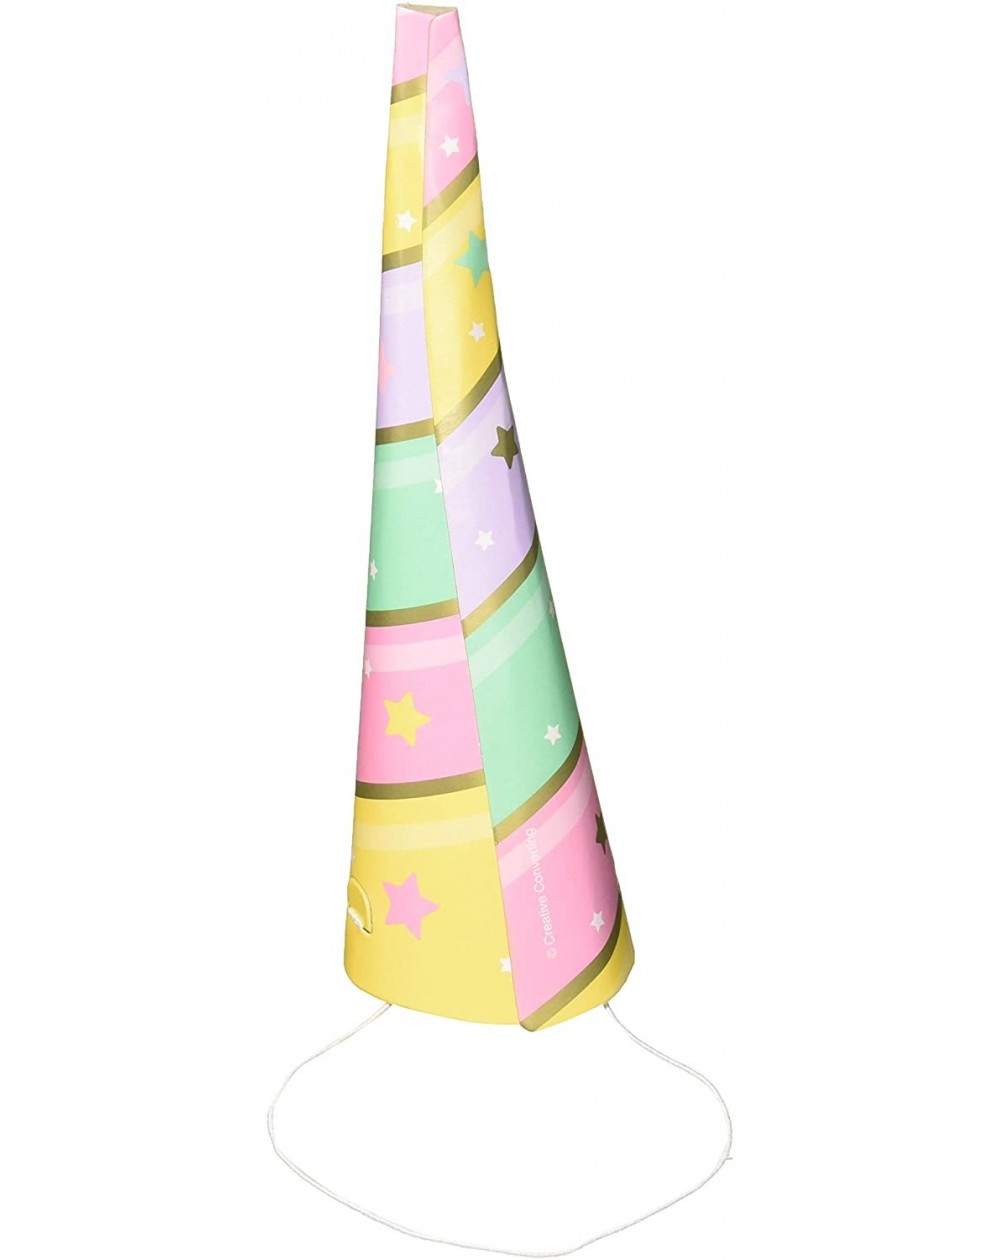 Hats Party Supplies- Sparkle Unicorn Horn Hat- Party Costumes- 7"- Multicolor- 8ct - C11844NHMCH $9.10